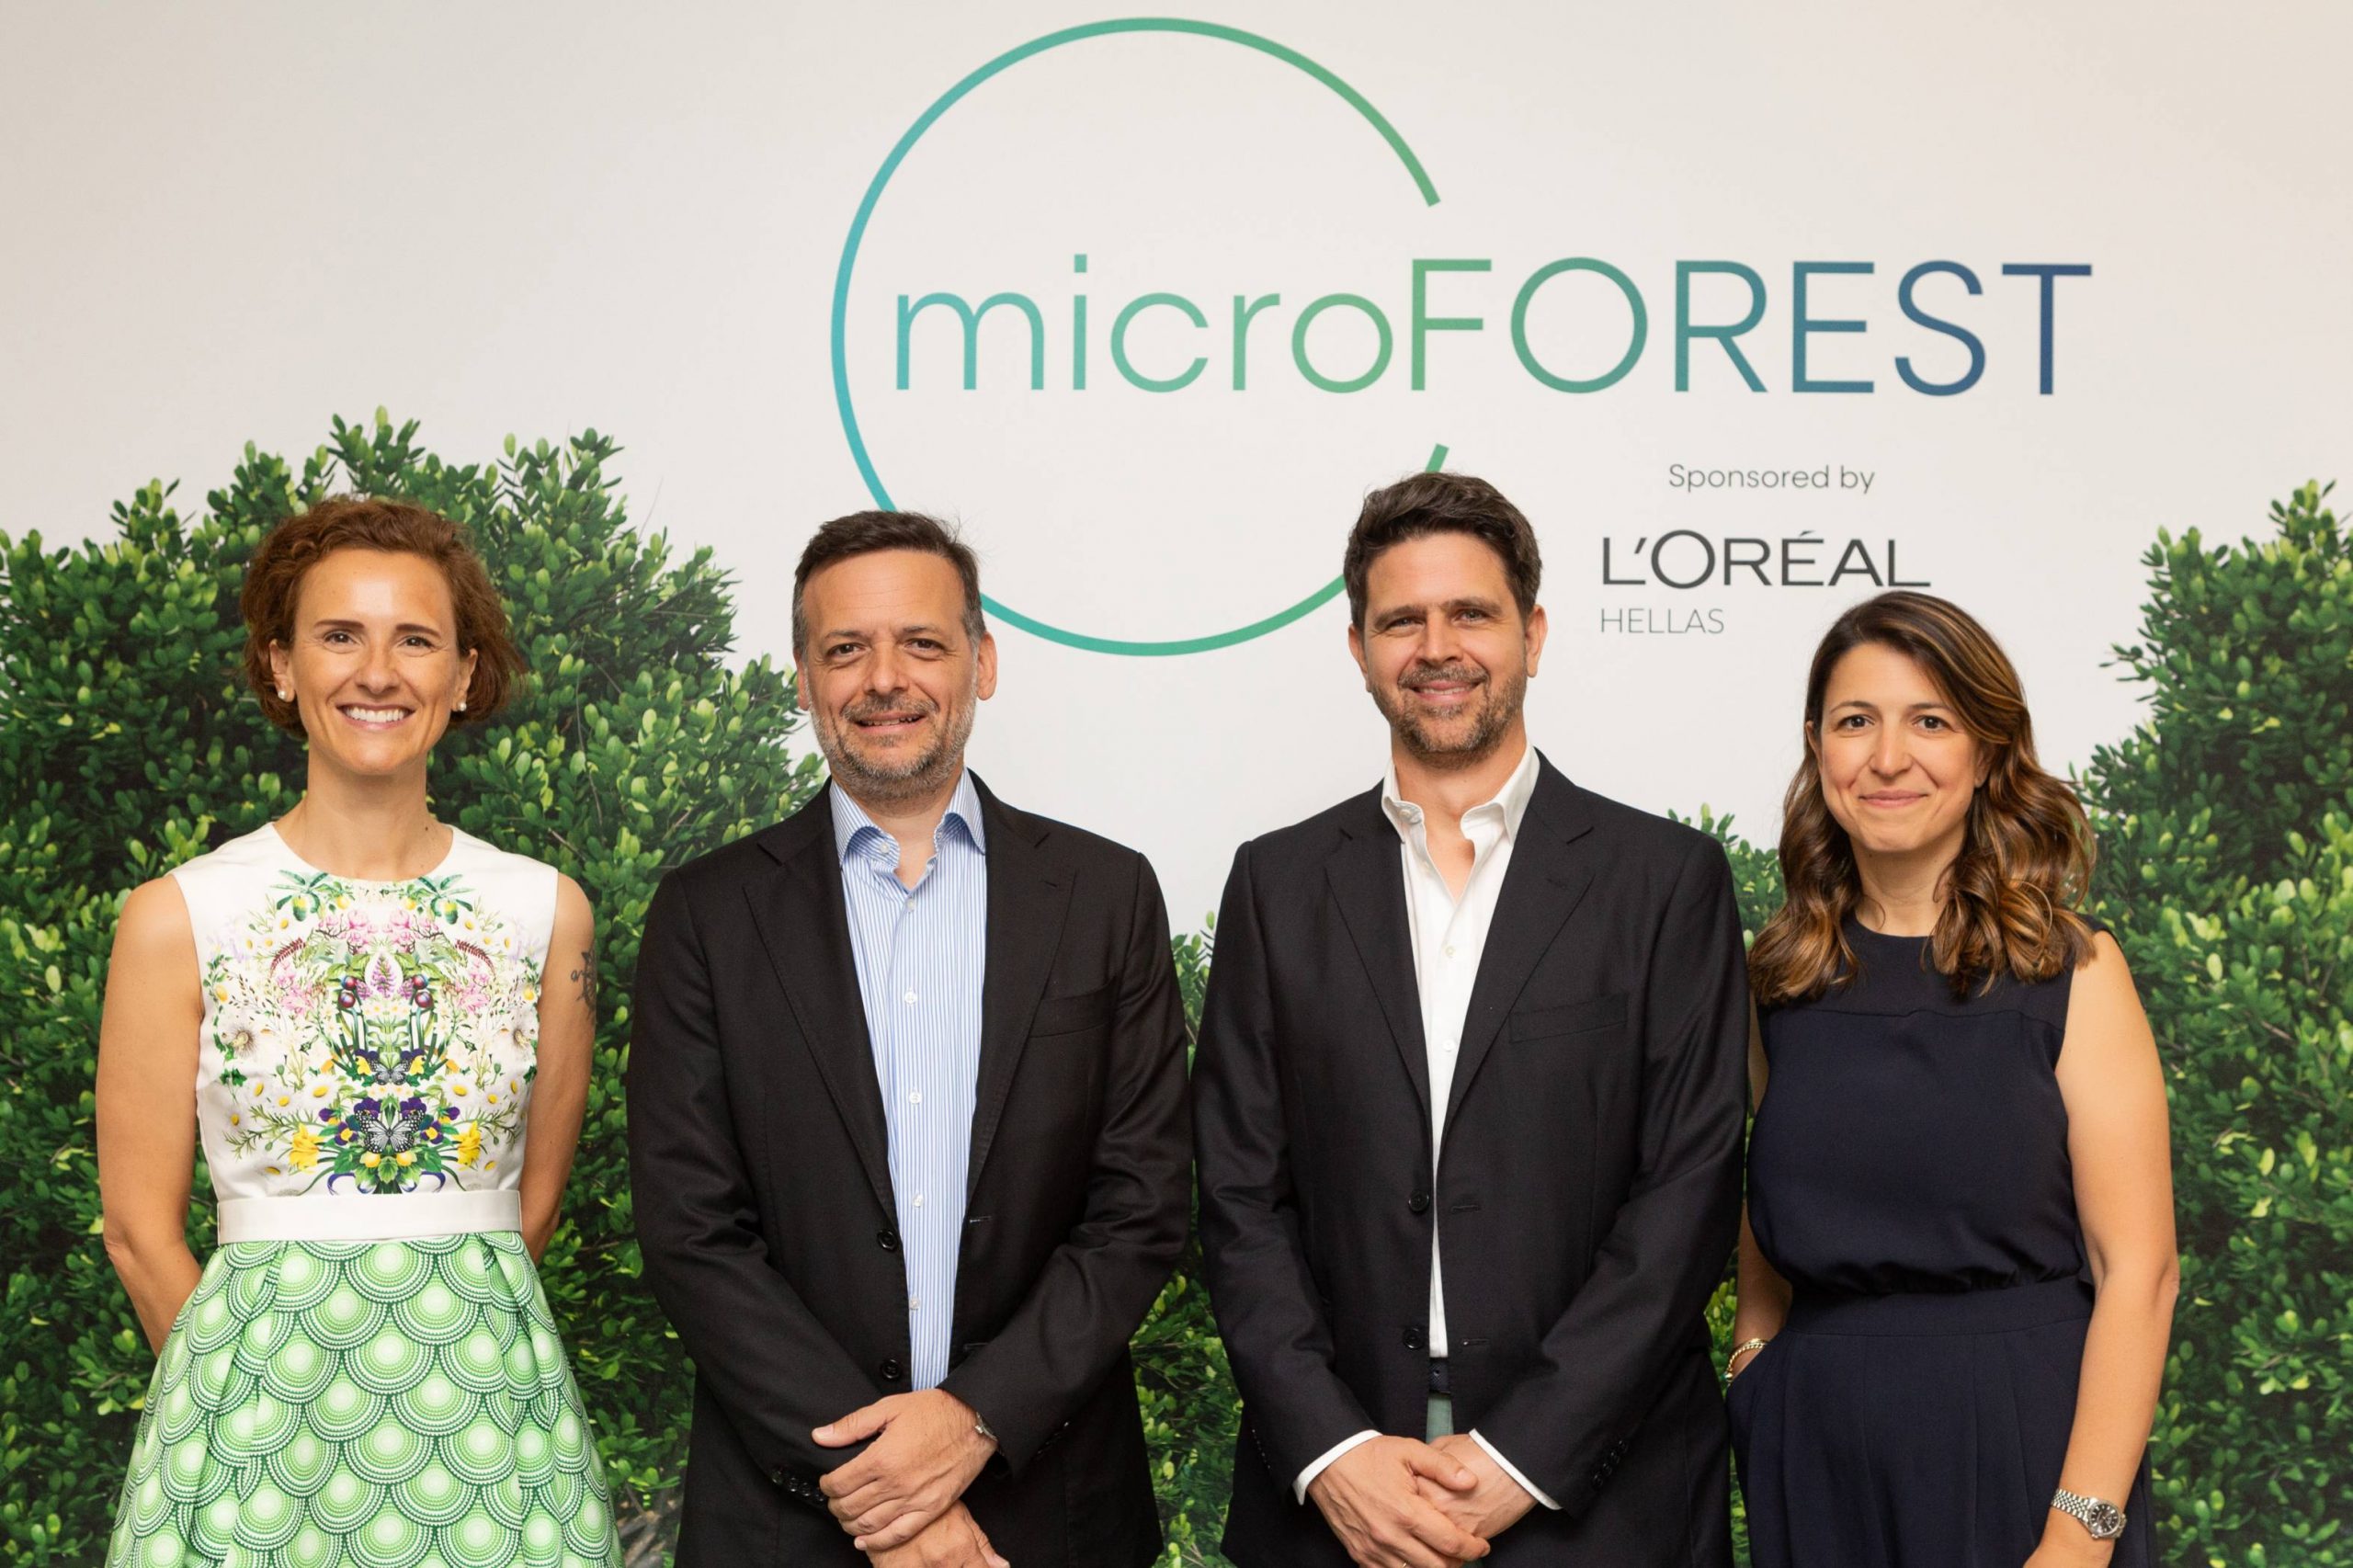 L’Oréal Hellas: Ένα micro Forest φυτεύεται στην καρδιά της Αθήνας